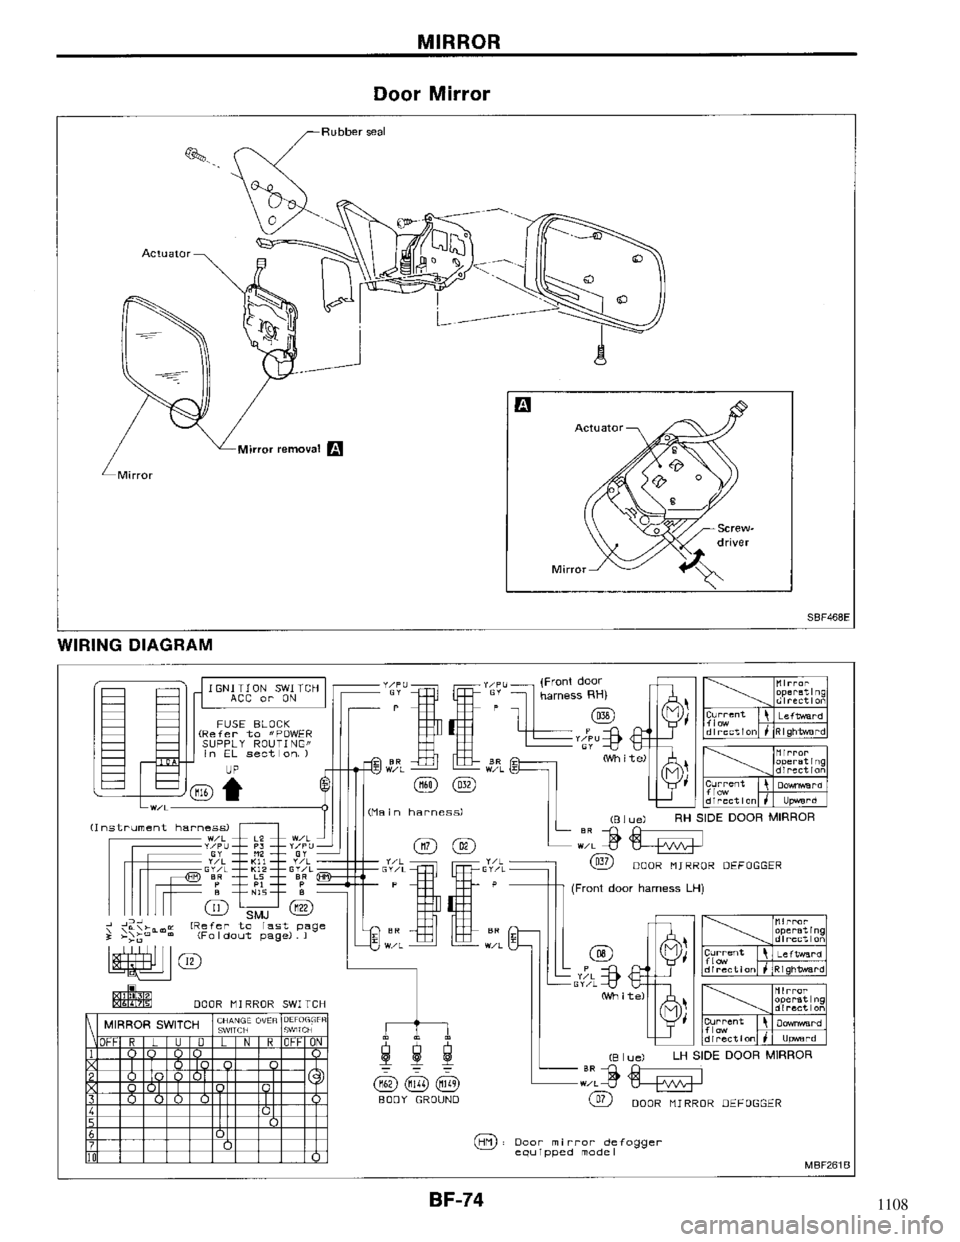 NISSAN MAXIMA 1994 A32 / 4.G Body Manual PDF 1108 